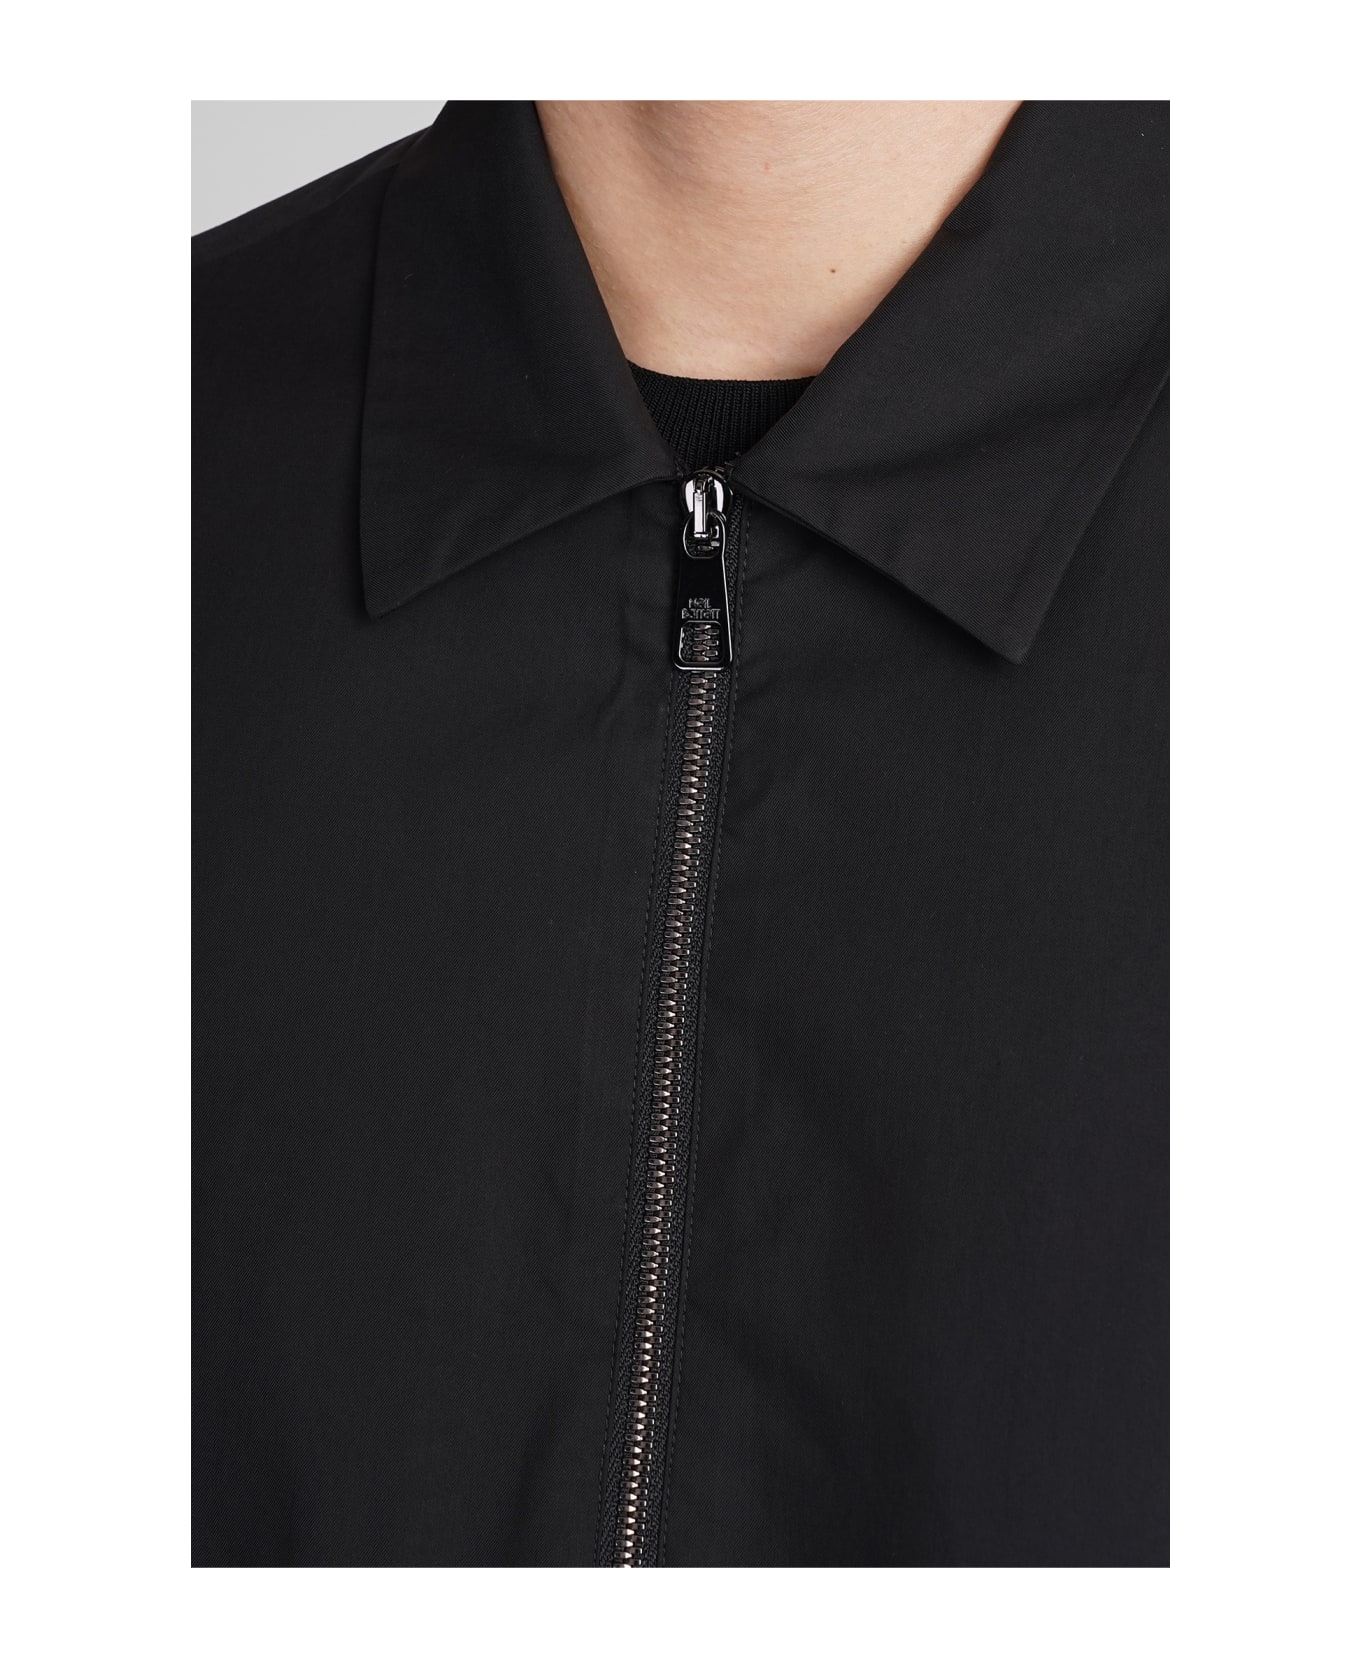 Neil Barrett Shirt In Black Cotton - black